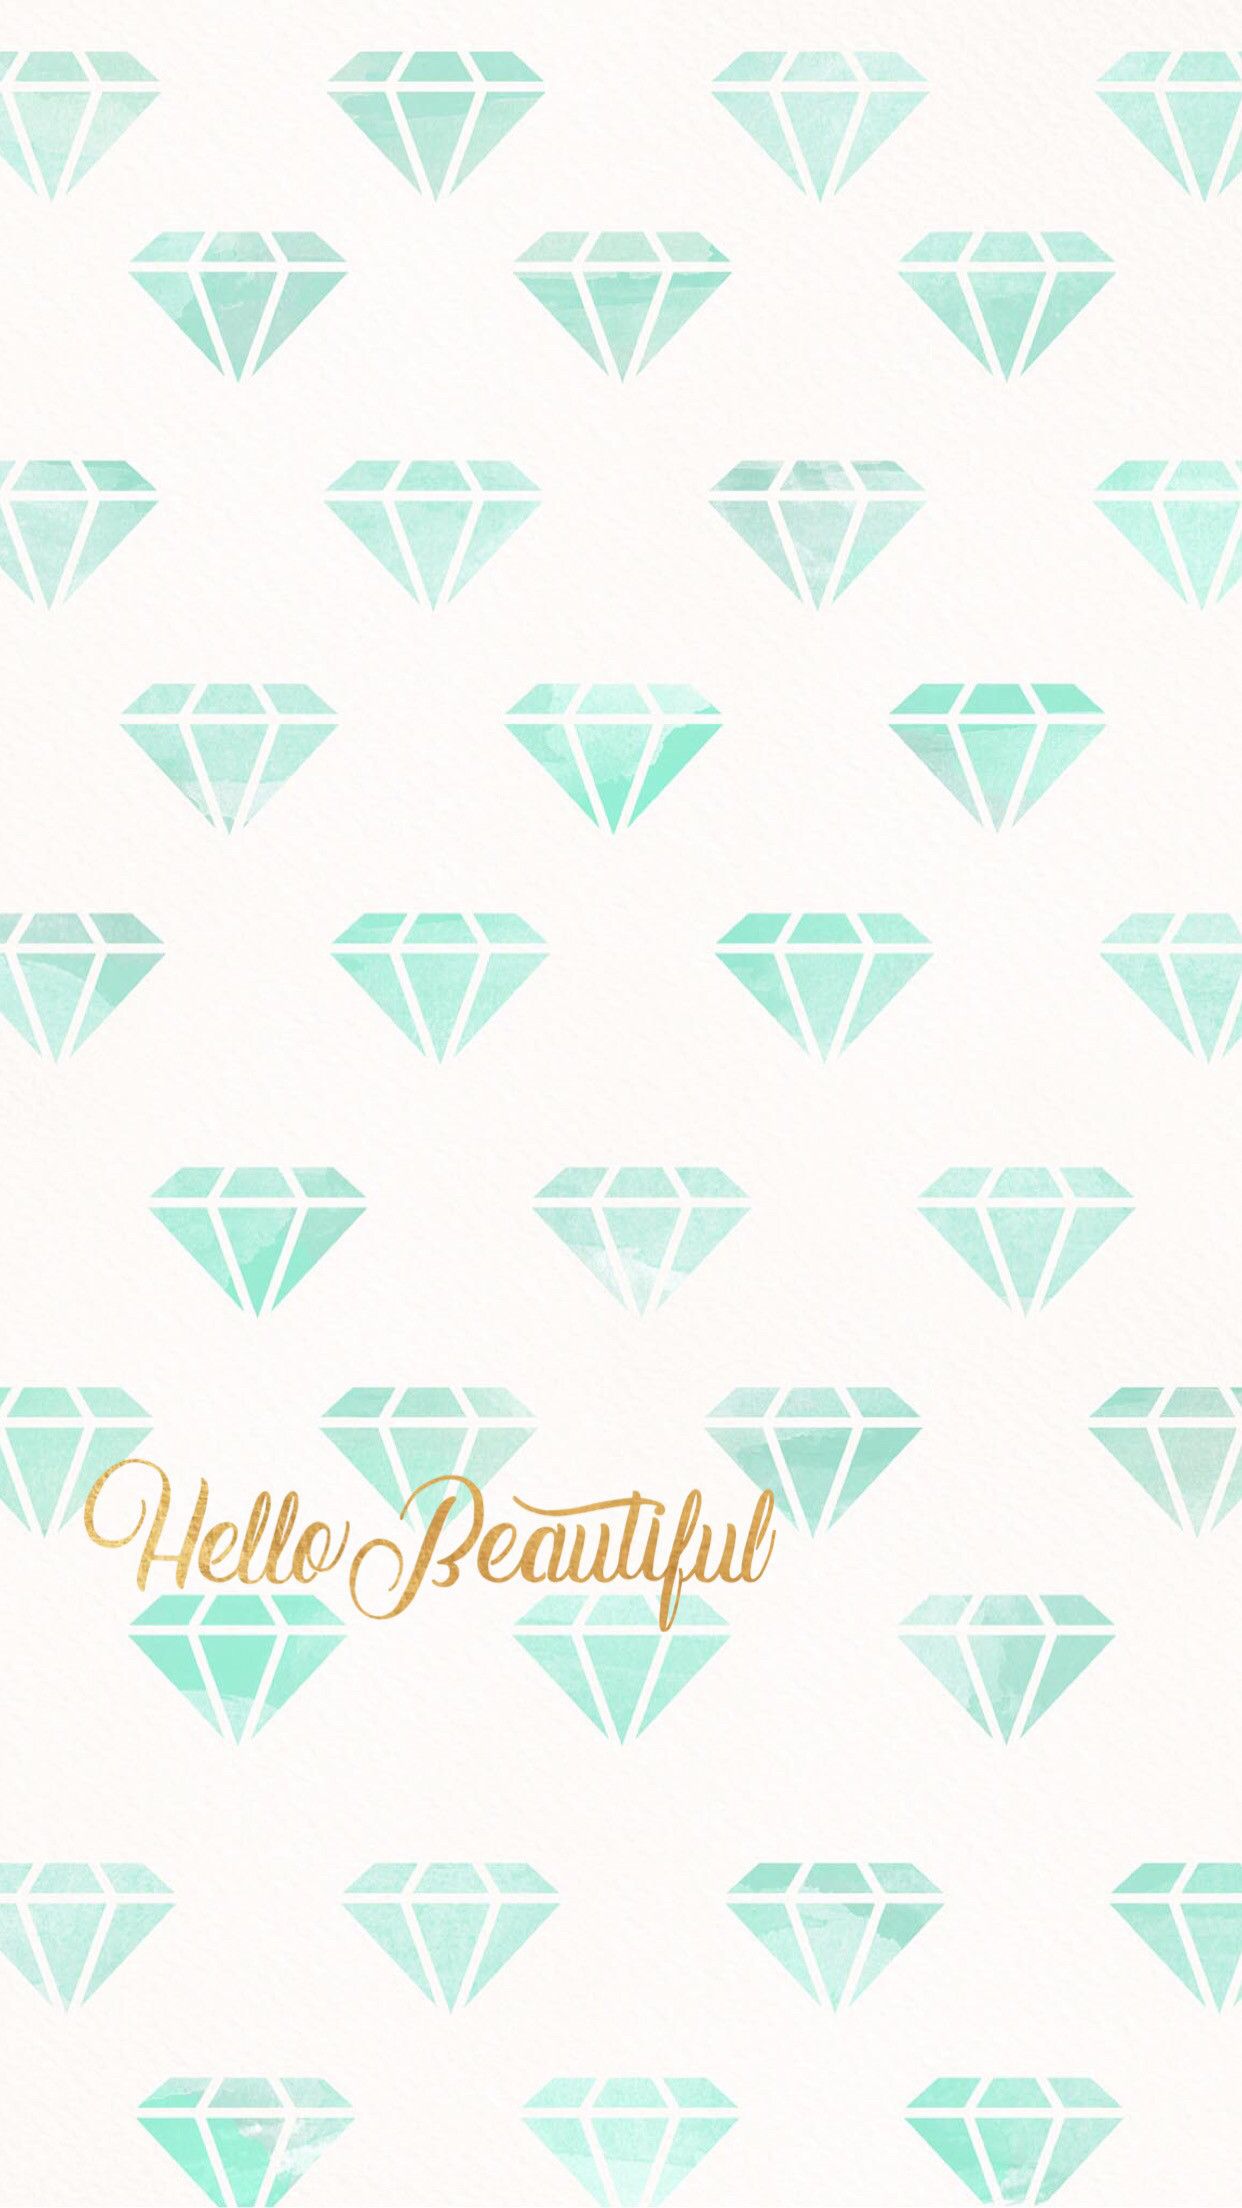 Diamond Wallpaper for iPhone